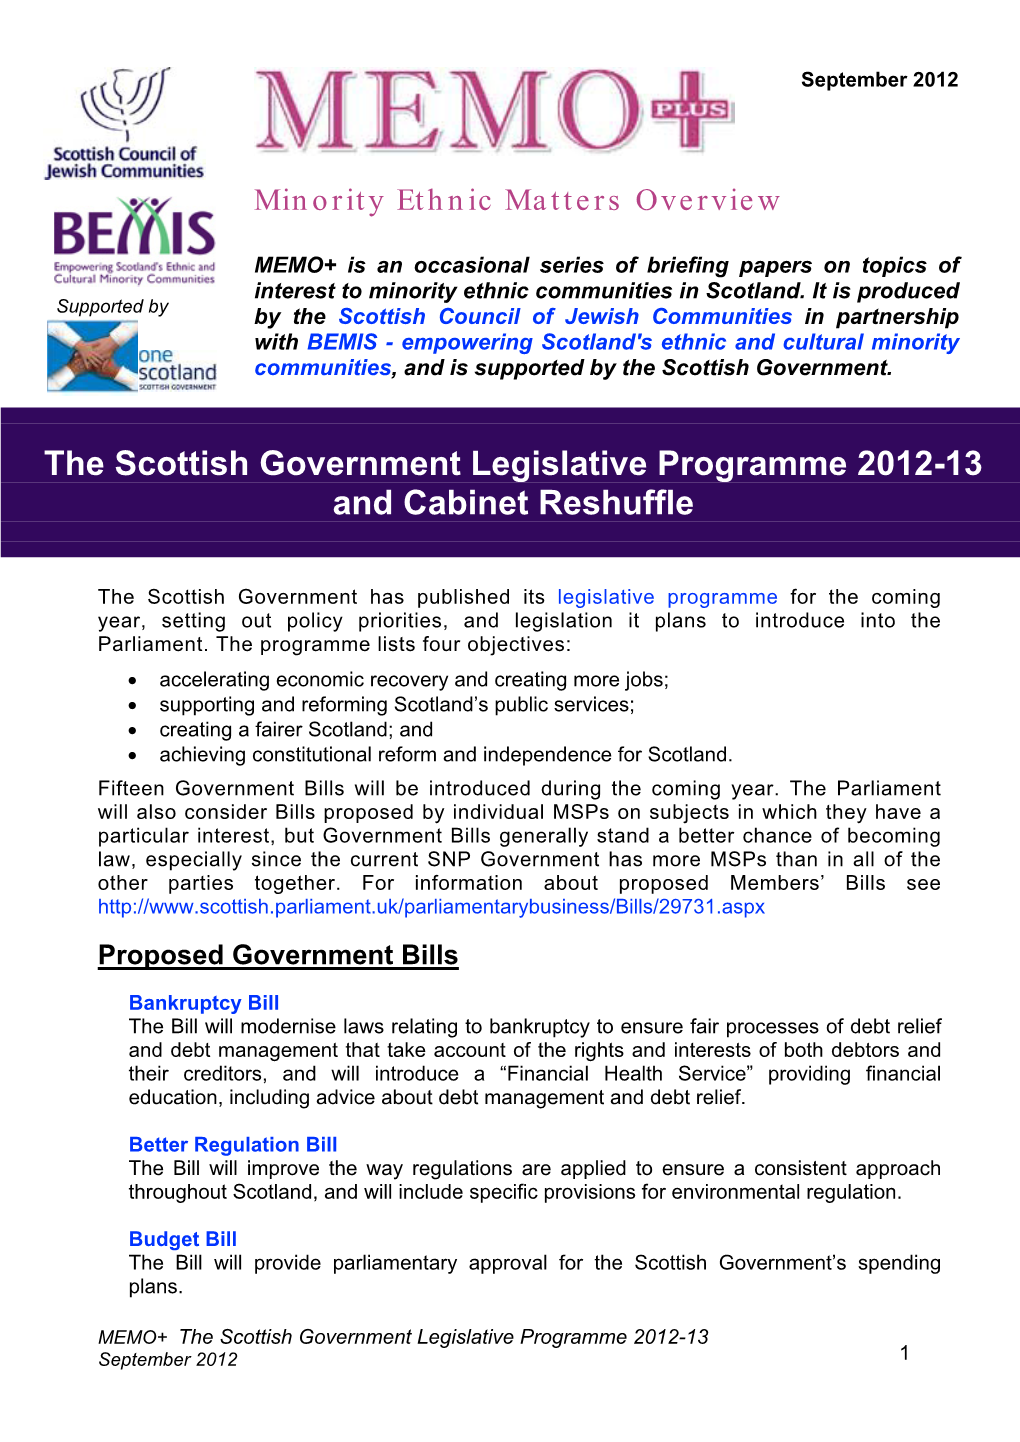 MEMO+ the Scottish Government Legislative Programme 2012-13 September 2012 1